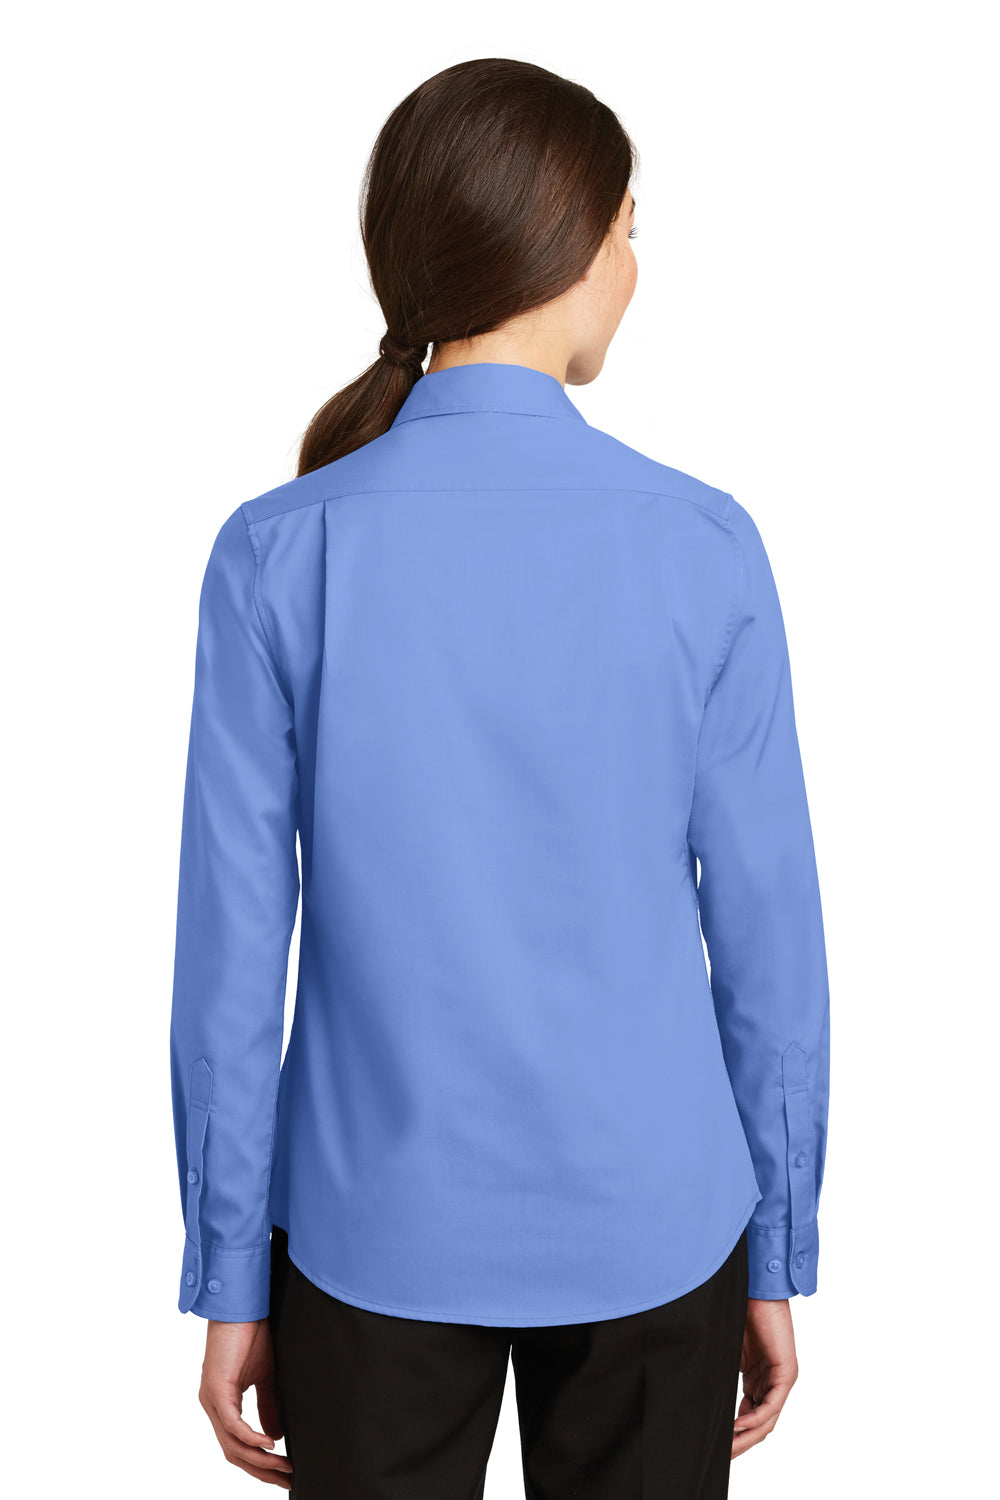 Port Authority L663 Womens SuperPro Wrinkle Resistant Long Sleeve Button Down Shirt Ultramarine Blue Back